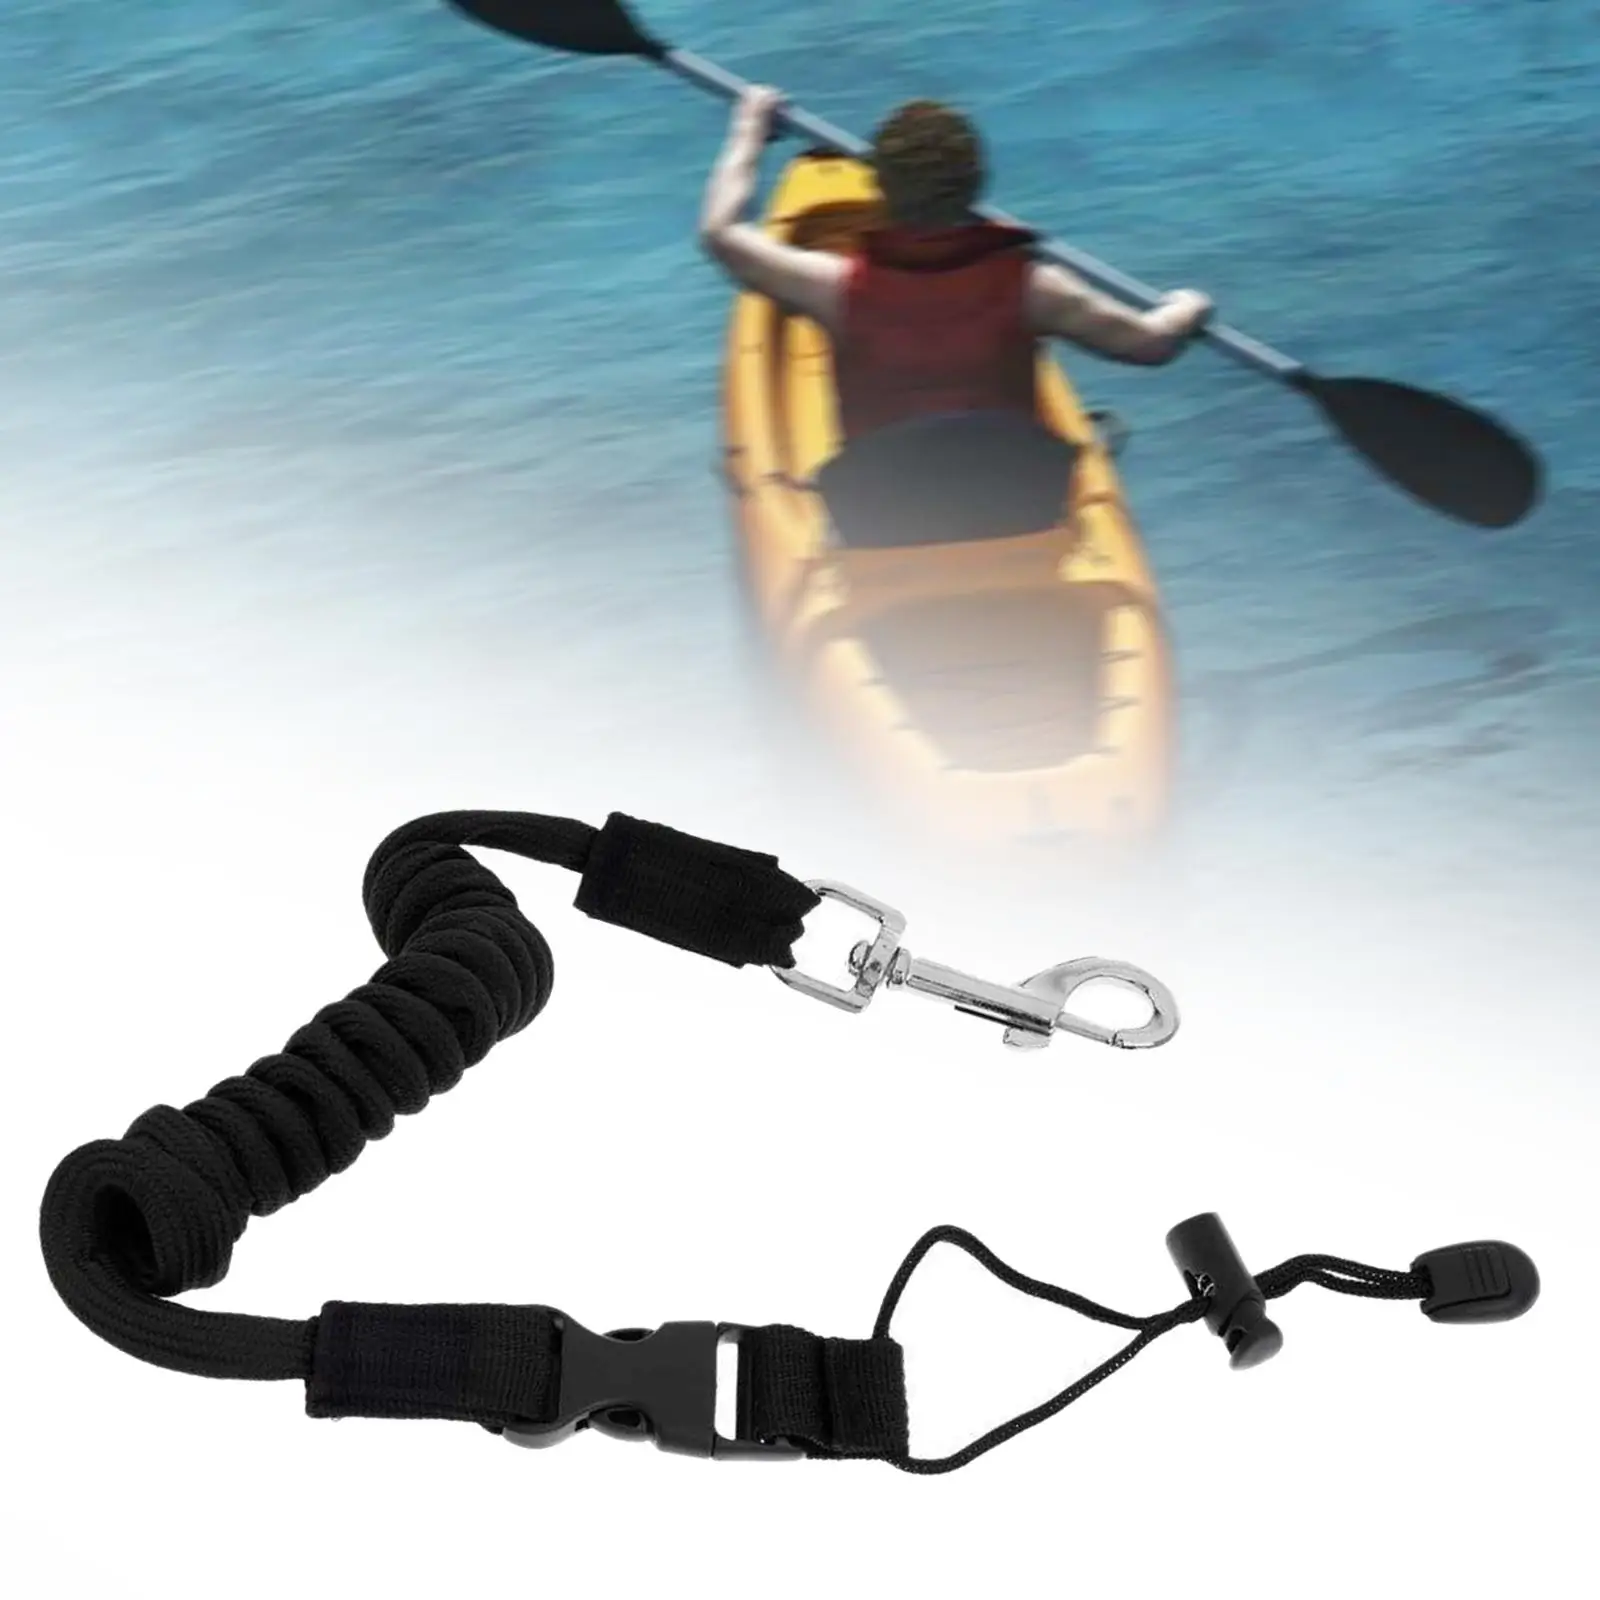 Kayak Paddle Tether Leash Kayaking Boating with Metal Buckle Clip Holder